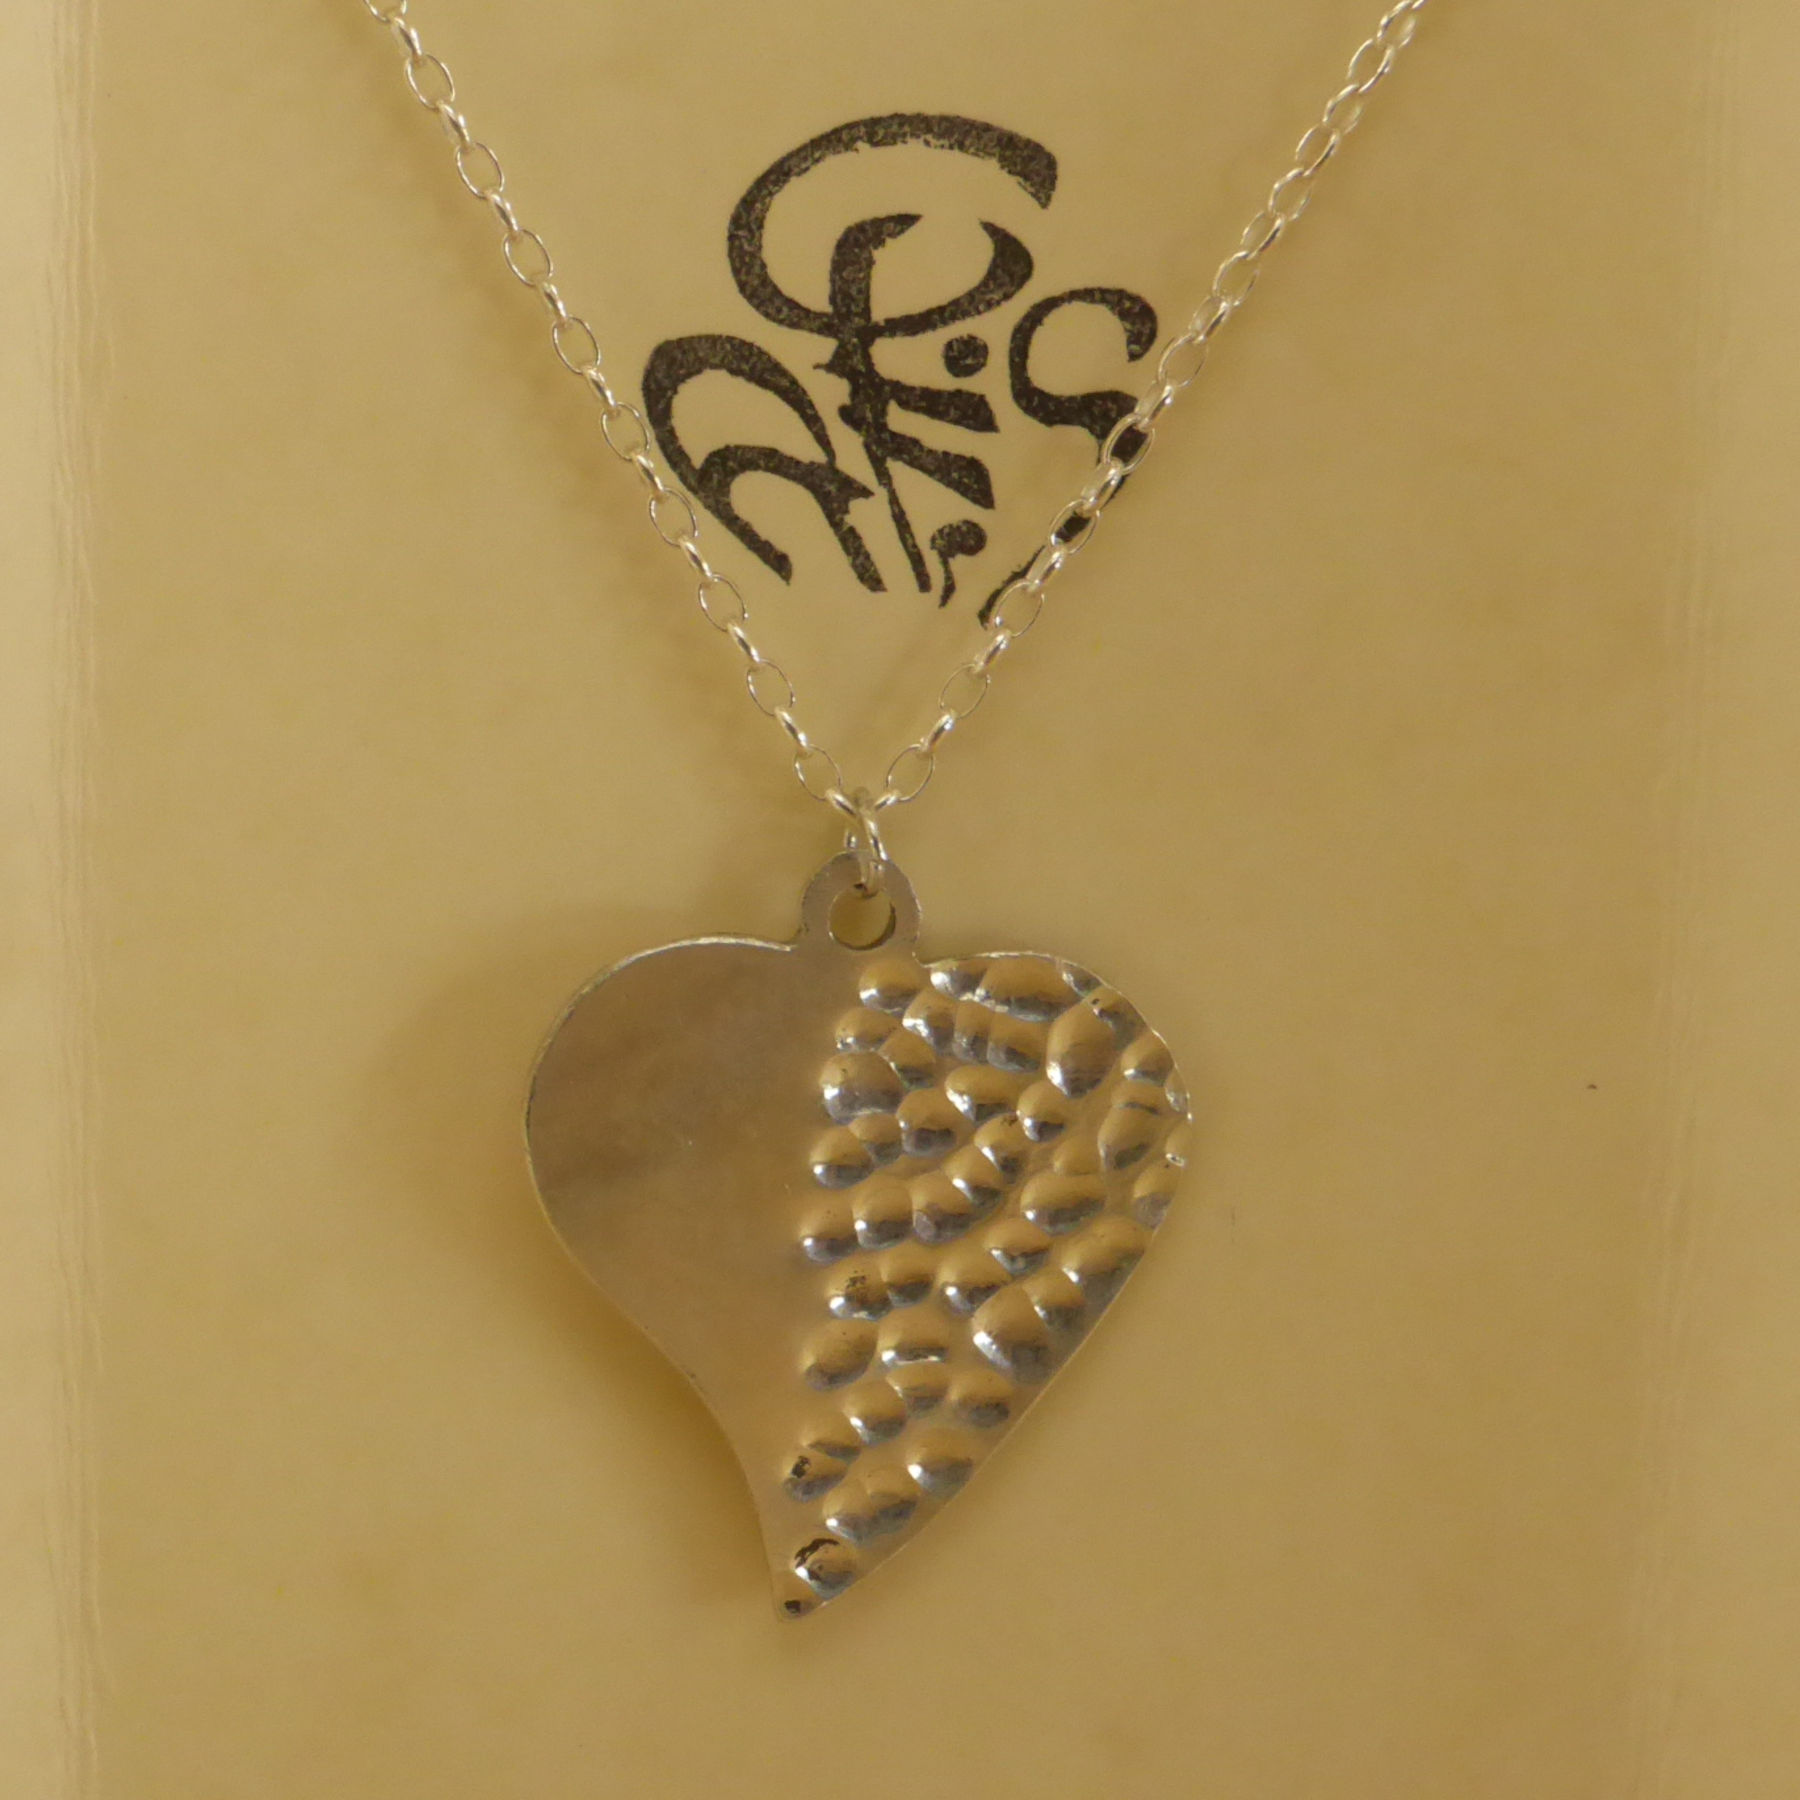 Solid silver heart pendant